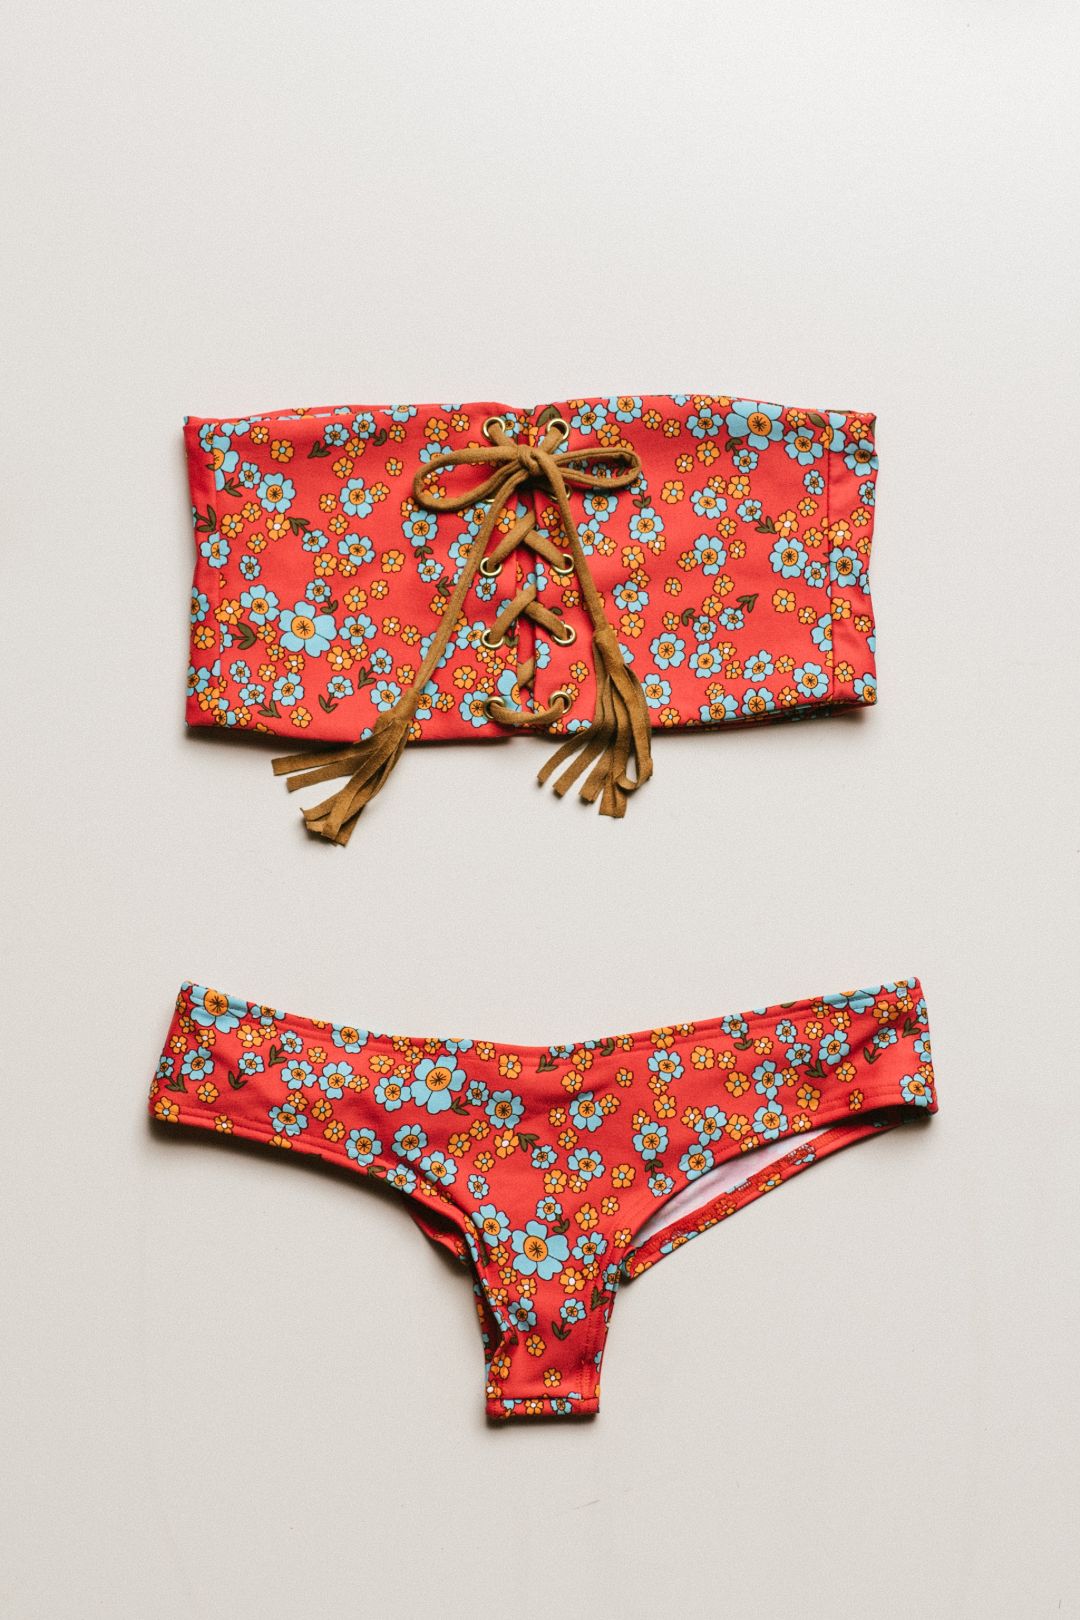 IU C&I Studios Portfolio The Shop Flat Lays Display of bikini bottoms